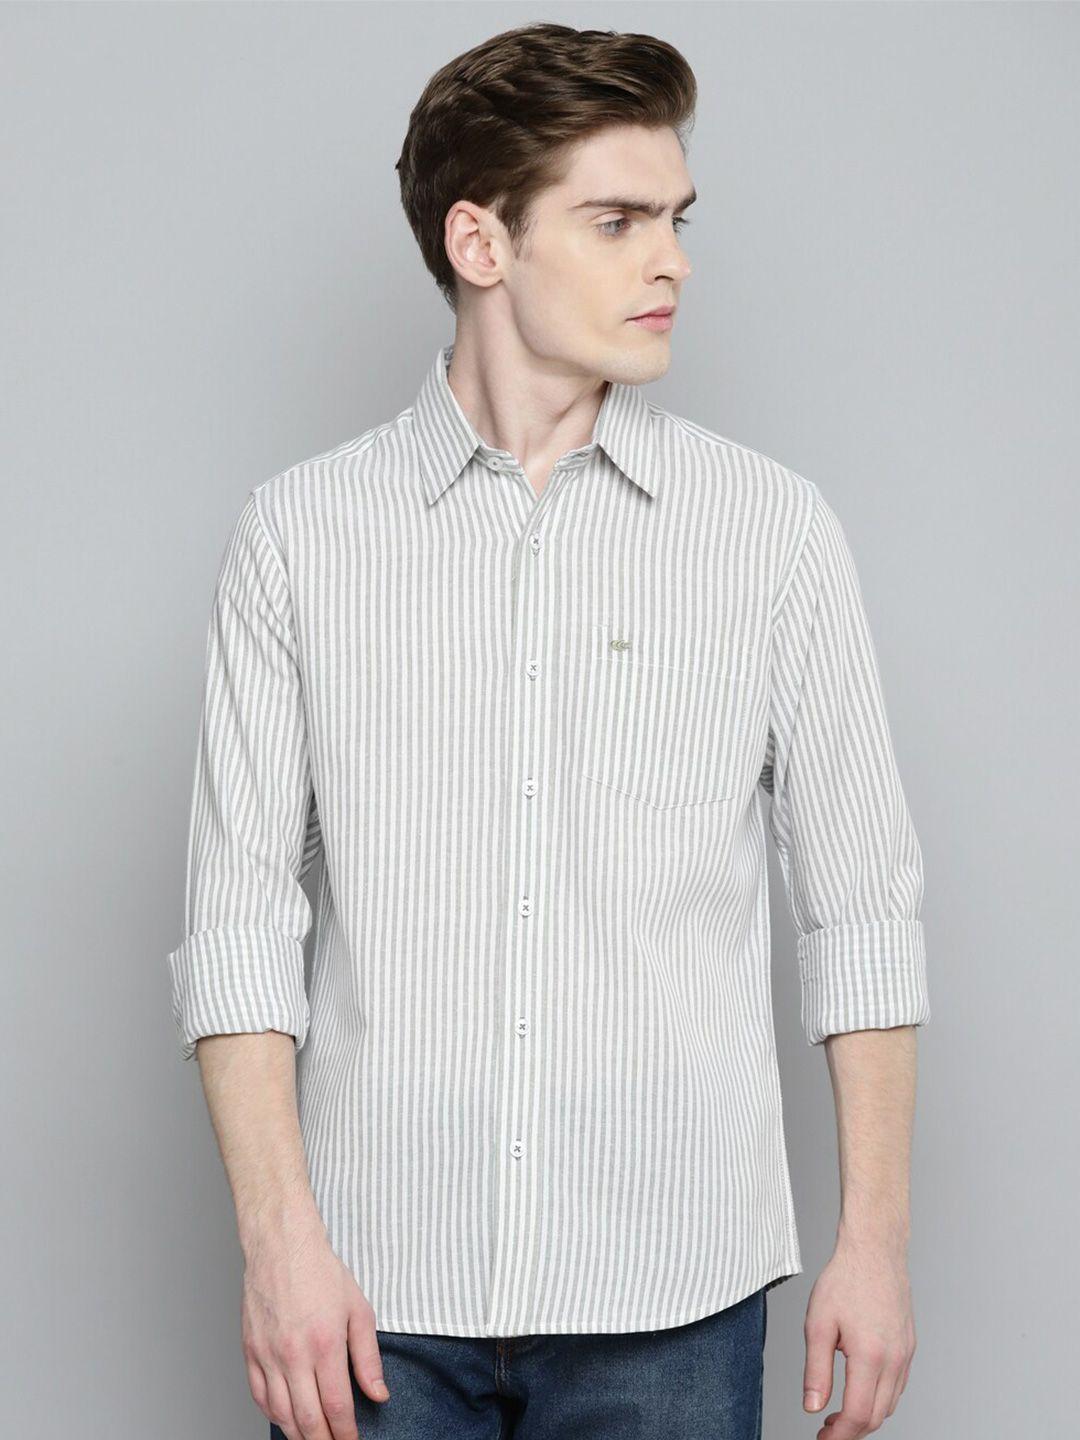 allen-cooper-slim-fit-opaque-printed-cotton-casual-shirt